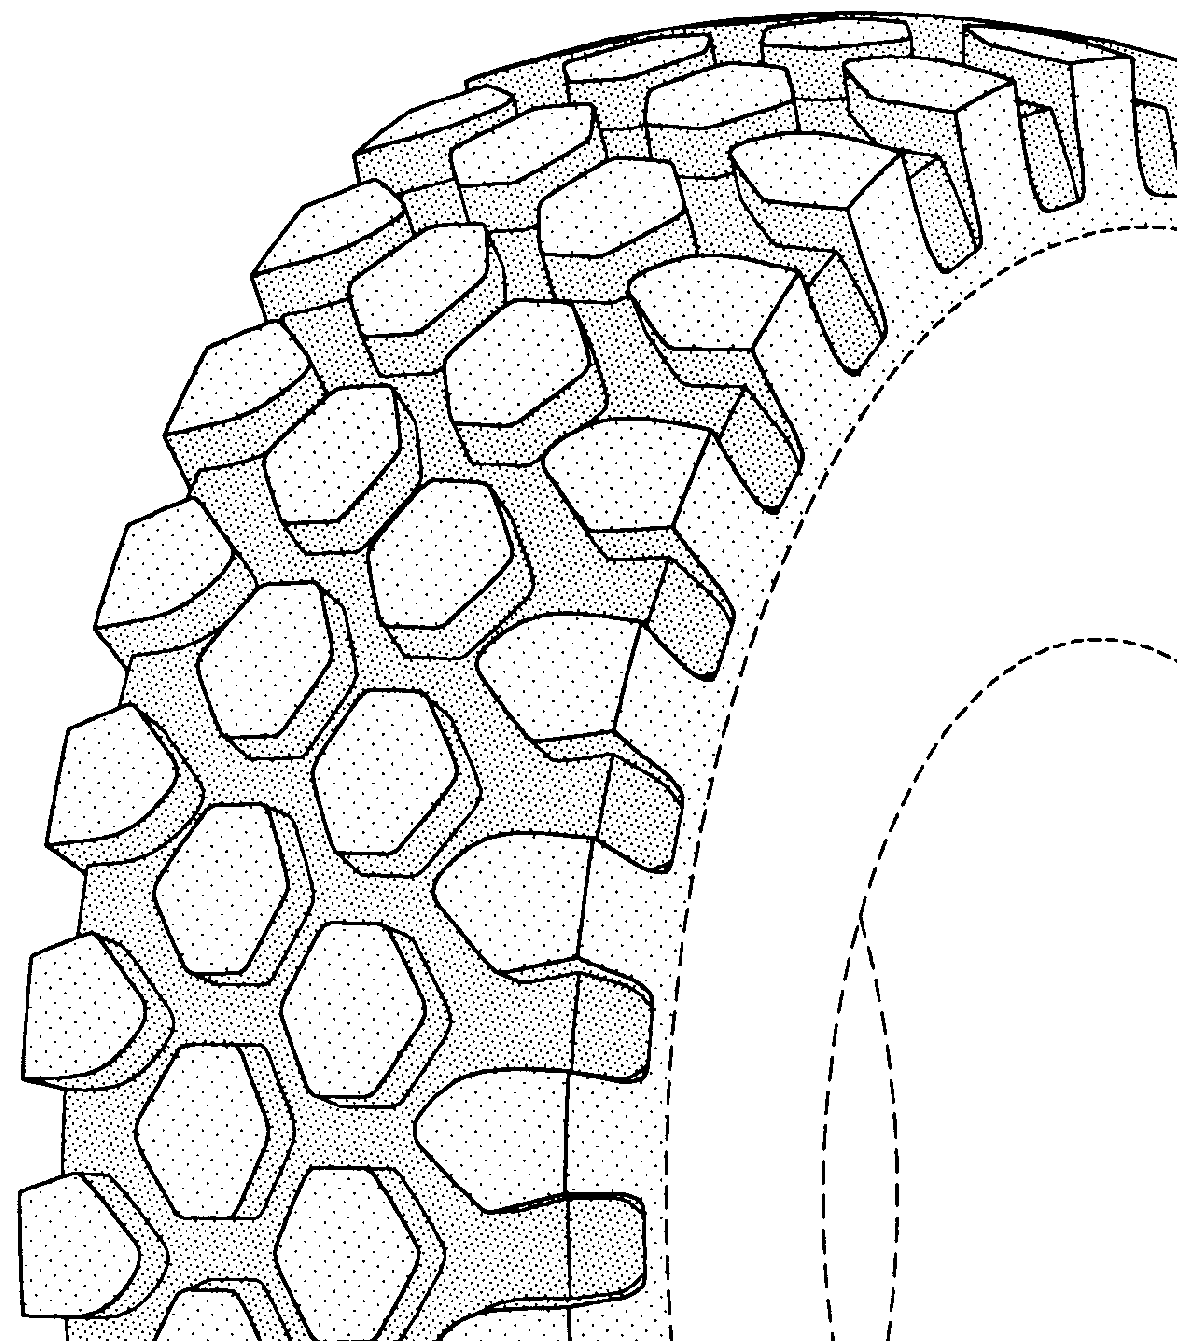 Example of discrete tread blocks arrayed on plain, nondirectionaltype tire tread surface.
